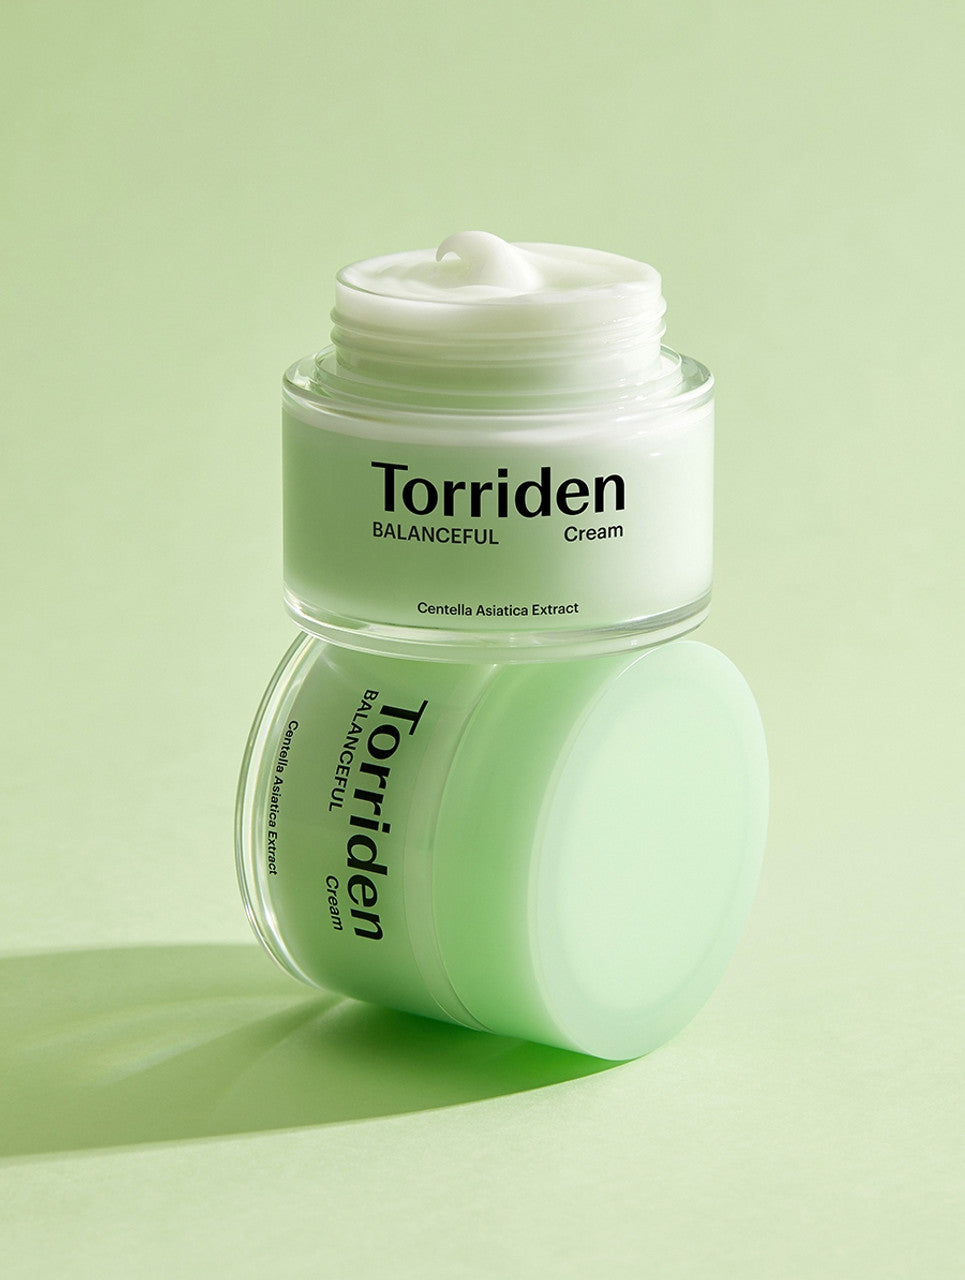 TORRIDEN - Balanceful Cica Cream 80ml